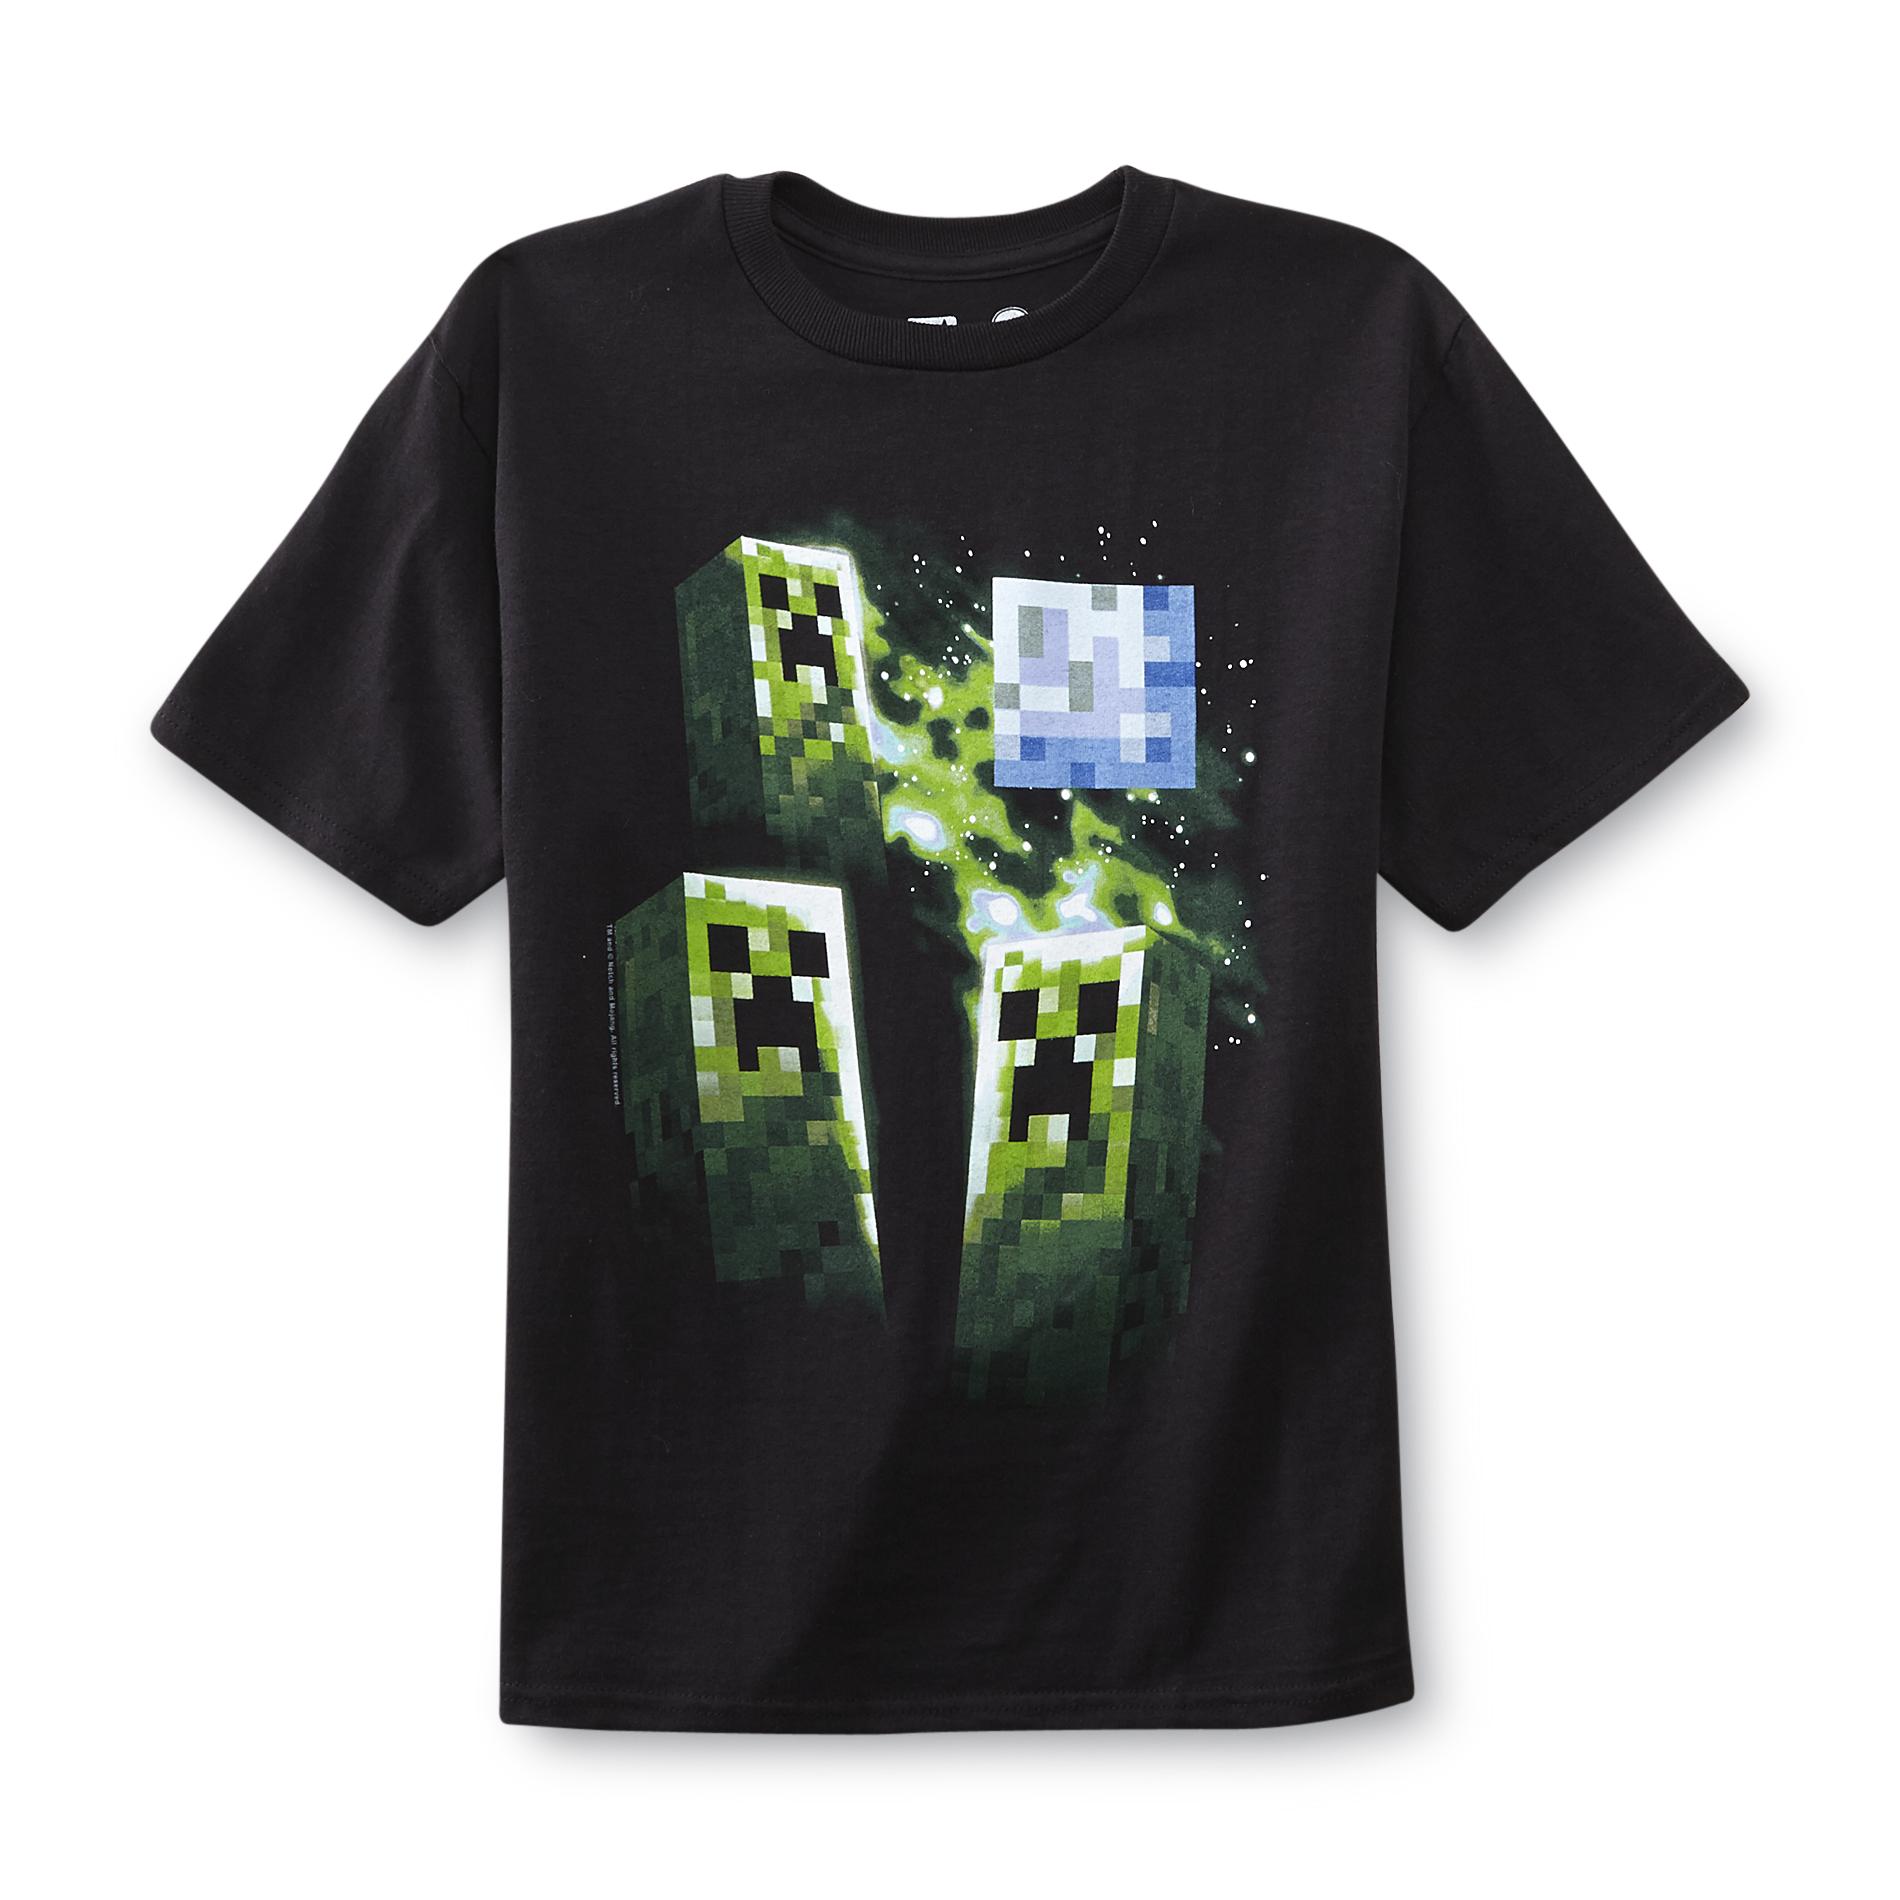 Minecraft Boy's Graphic T-Shirt - Creeper